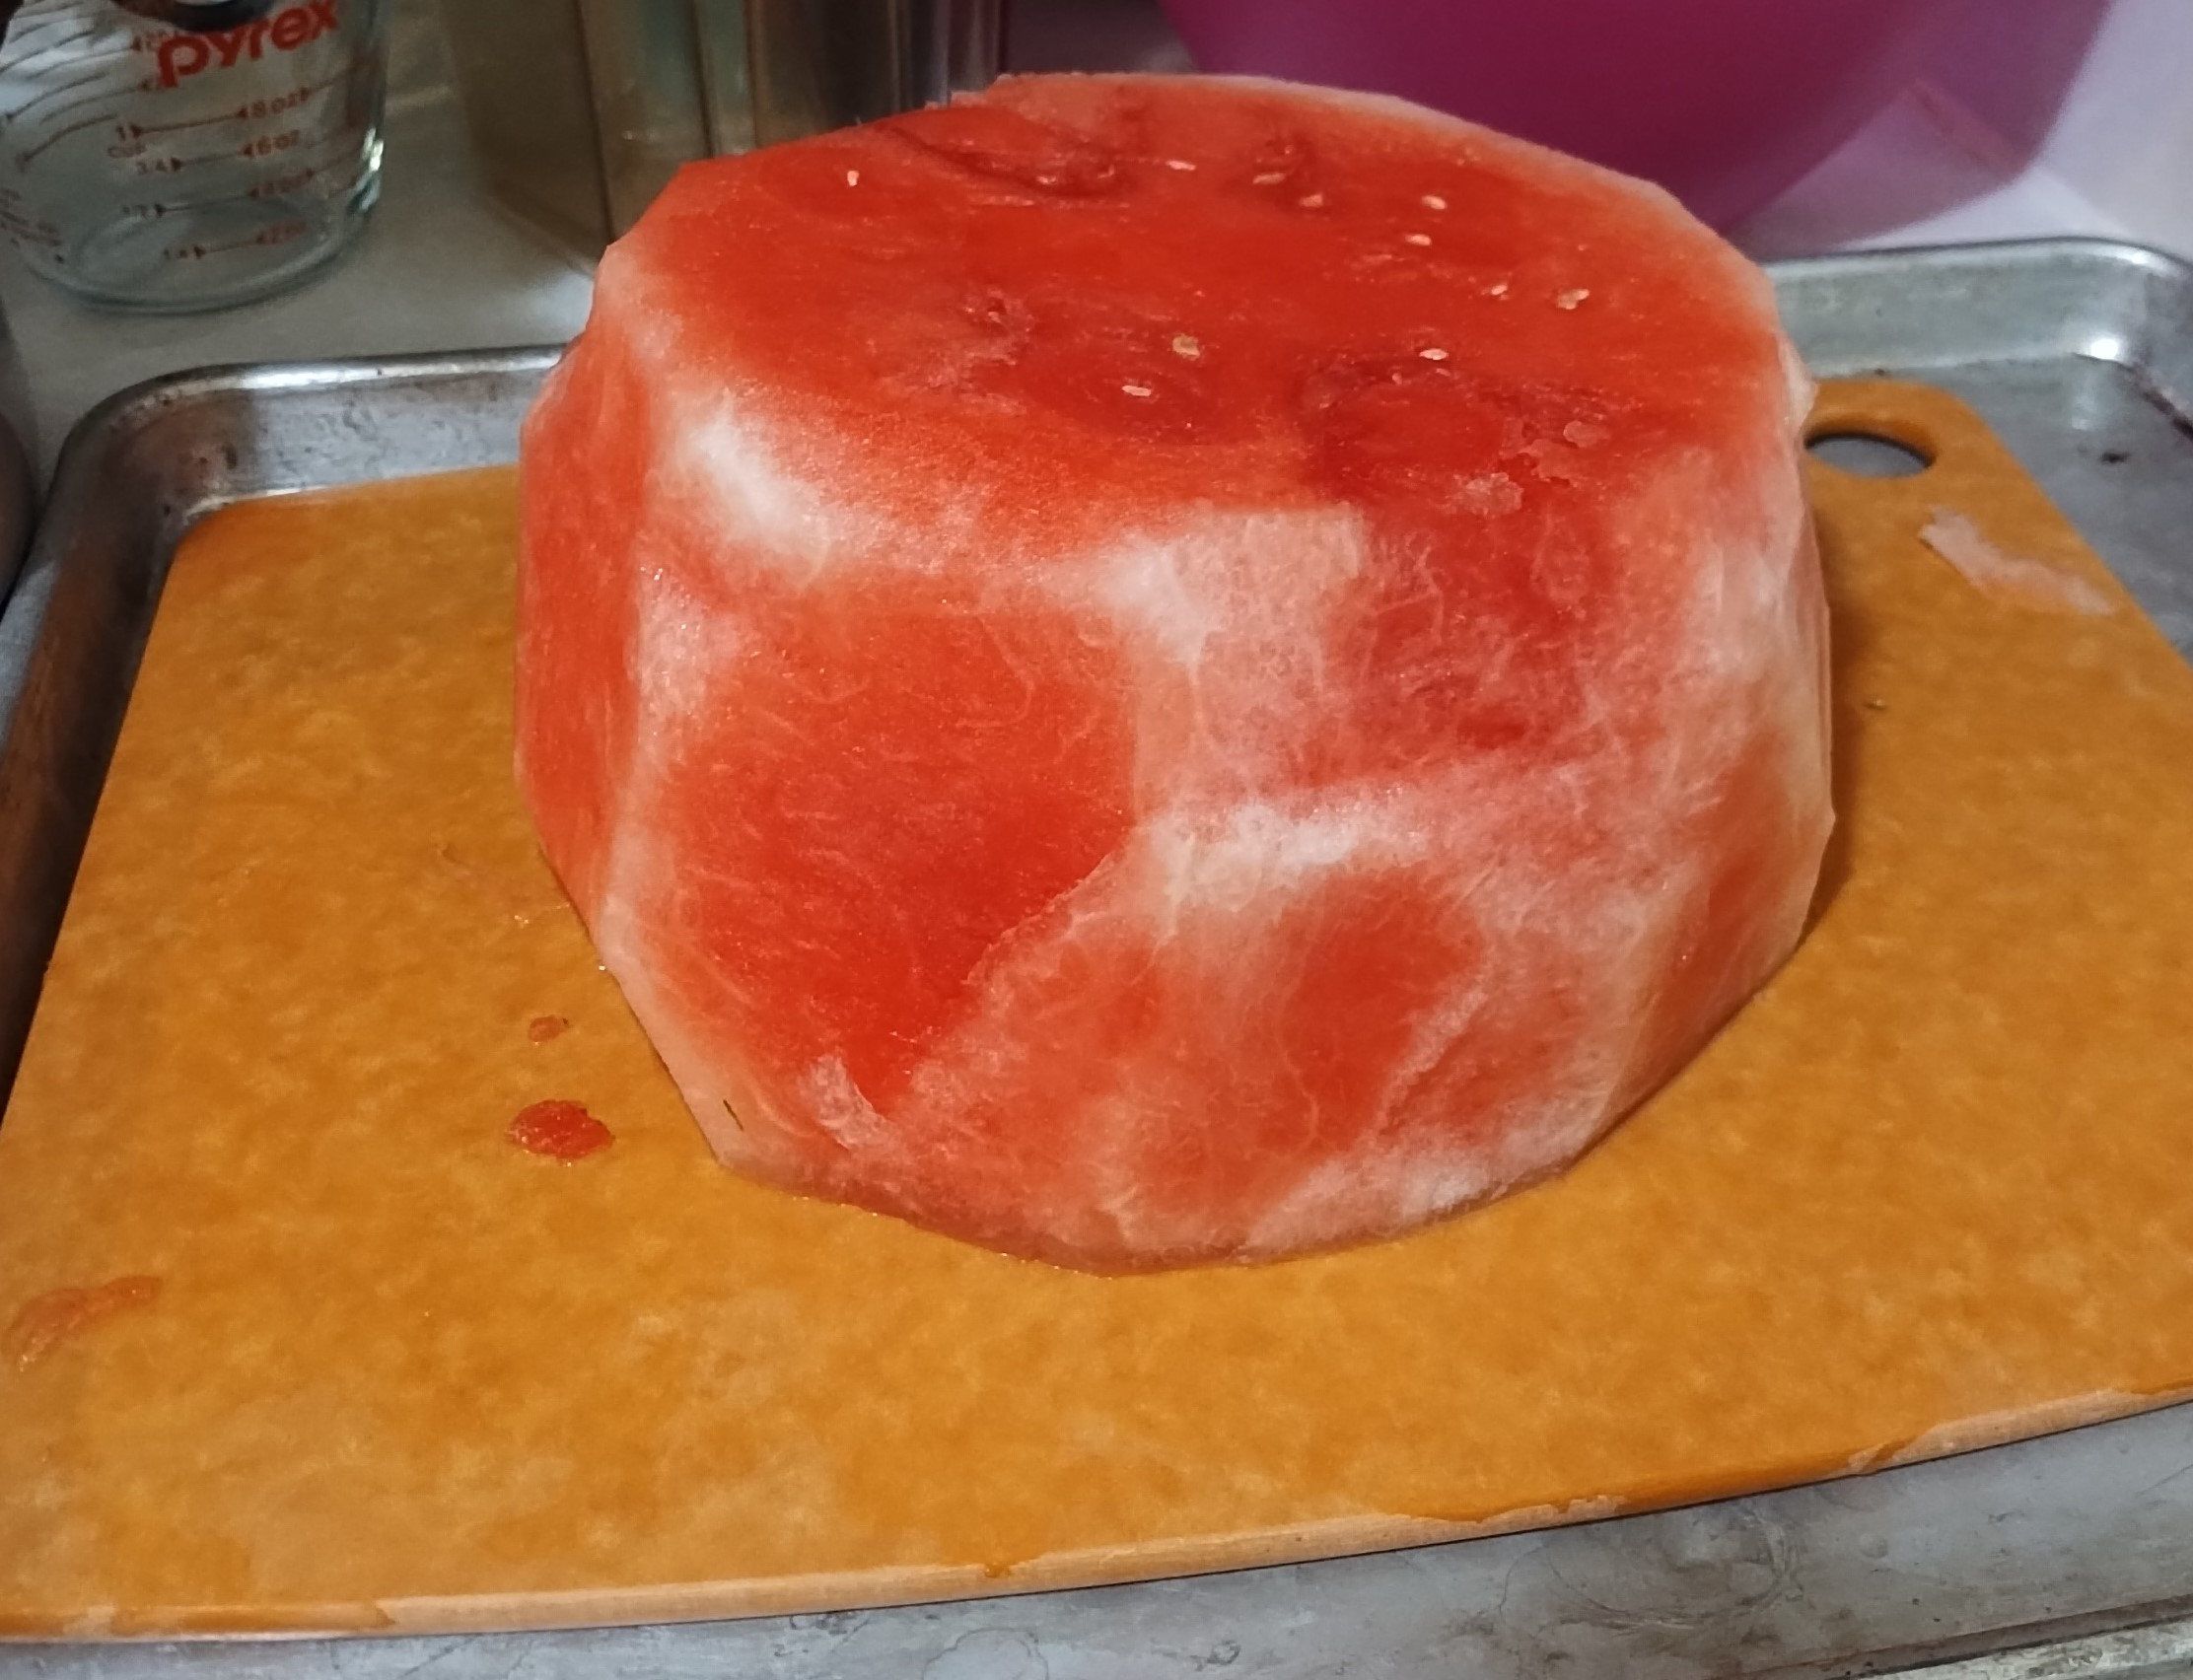 Watermelon on cutting board on baking pan